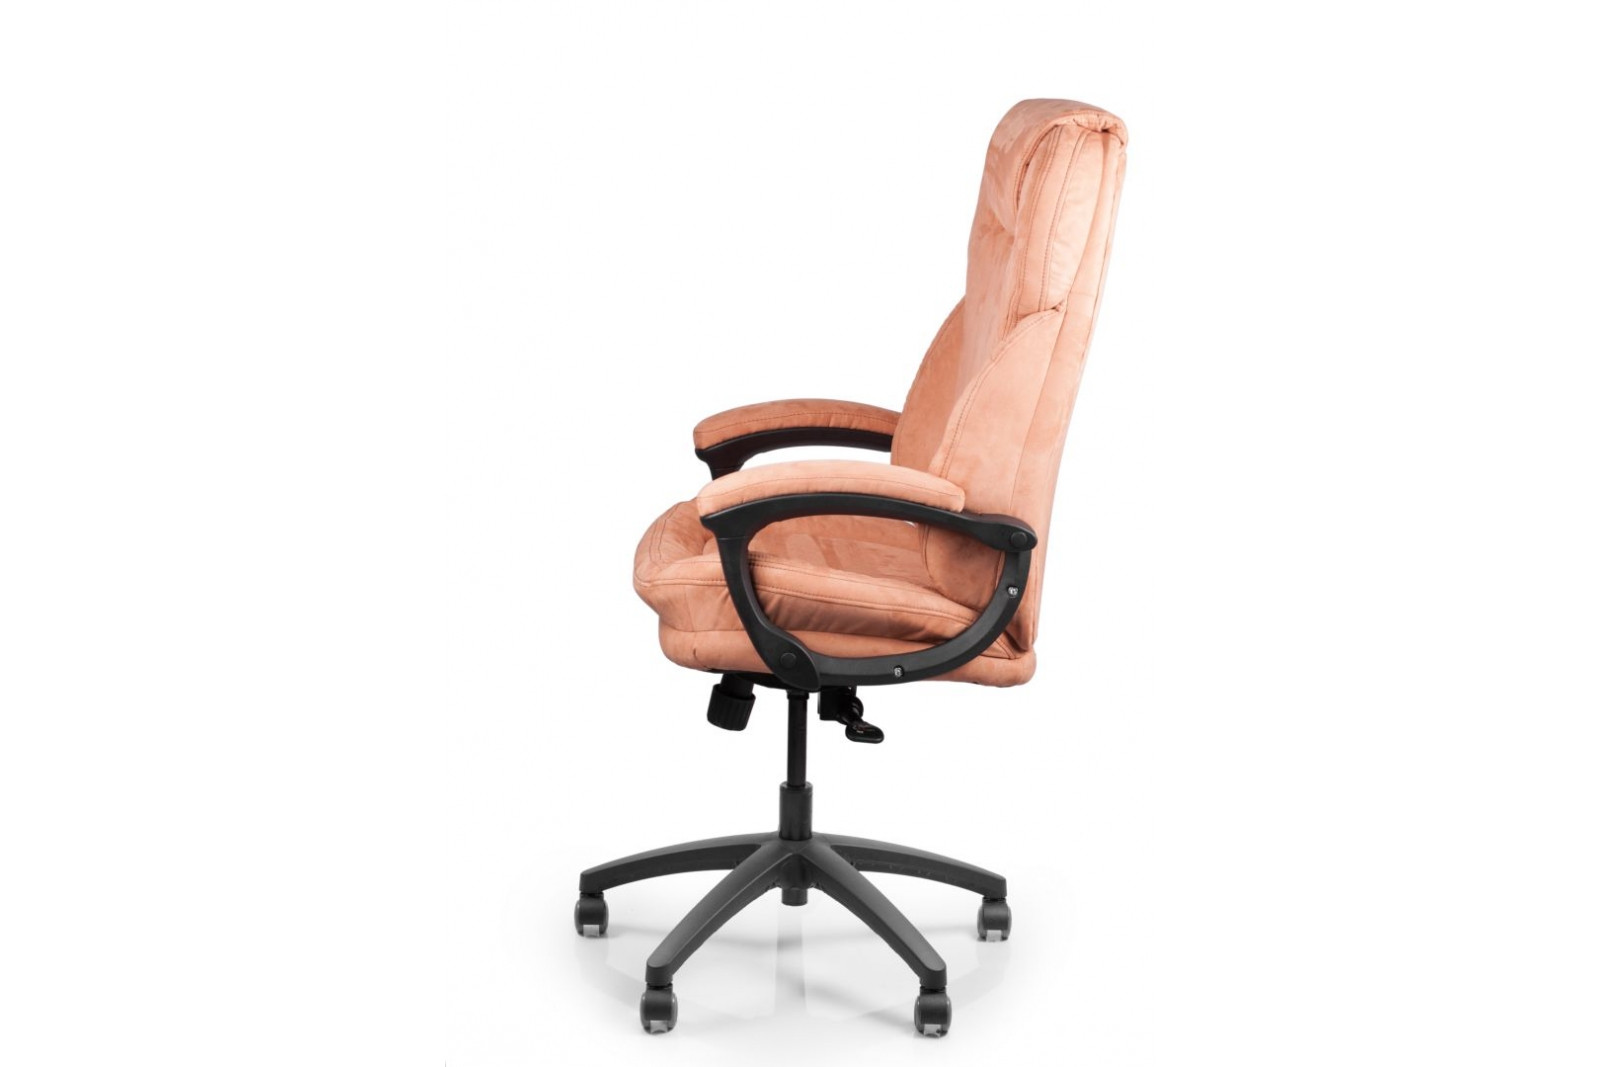 Кресло офисное BRS- Soft Arm peach SFb_antysh-02